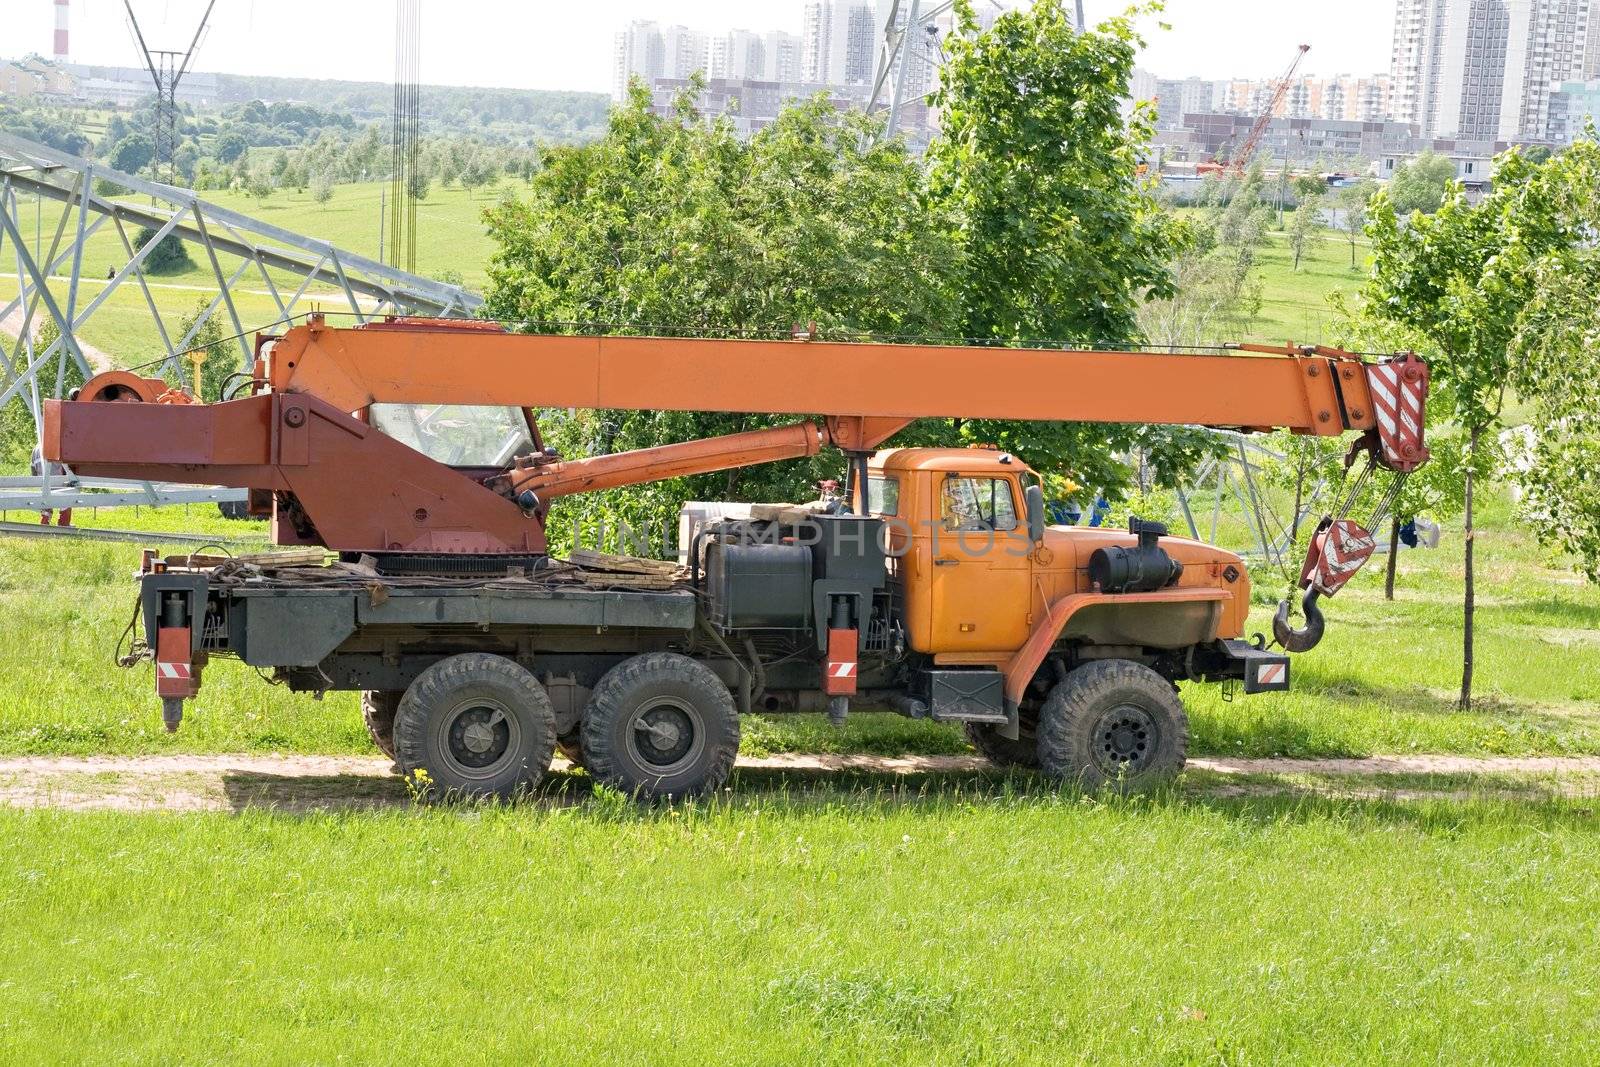 An orange crane truck standing in a city park